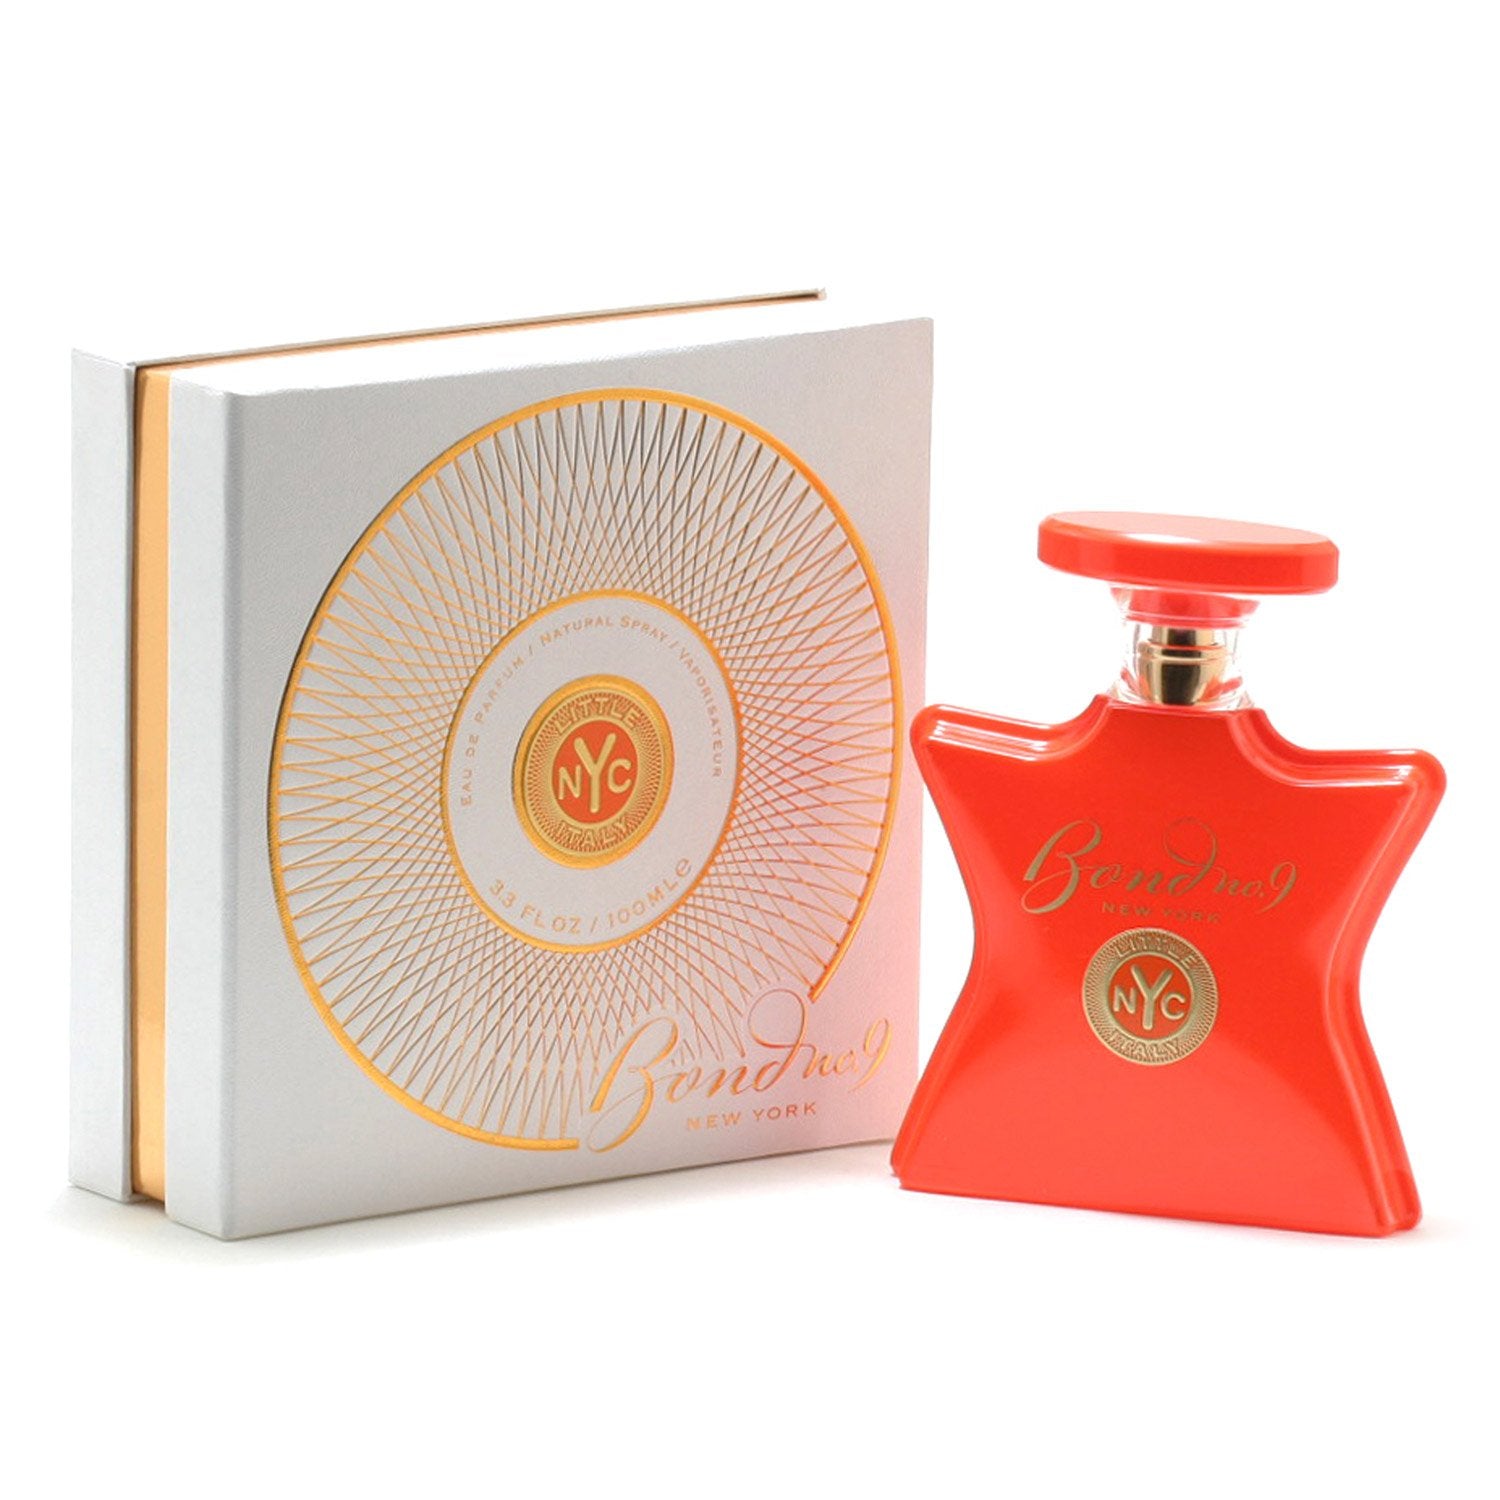 Perfume - BOND NO 9 LITTLE ITALY UNISEX - EAU DE PARFUM SPRAY, 3.4 OZ